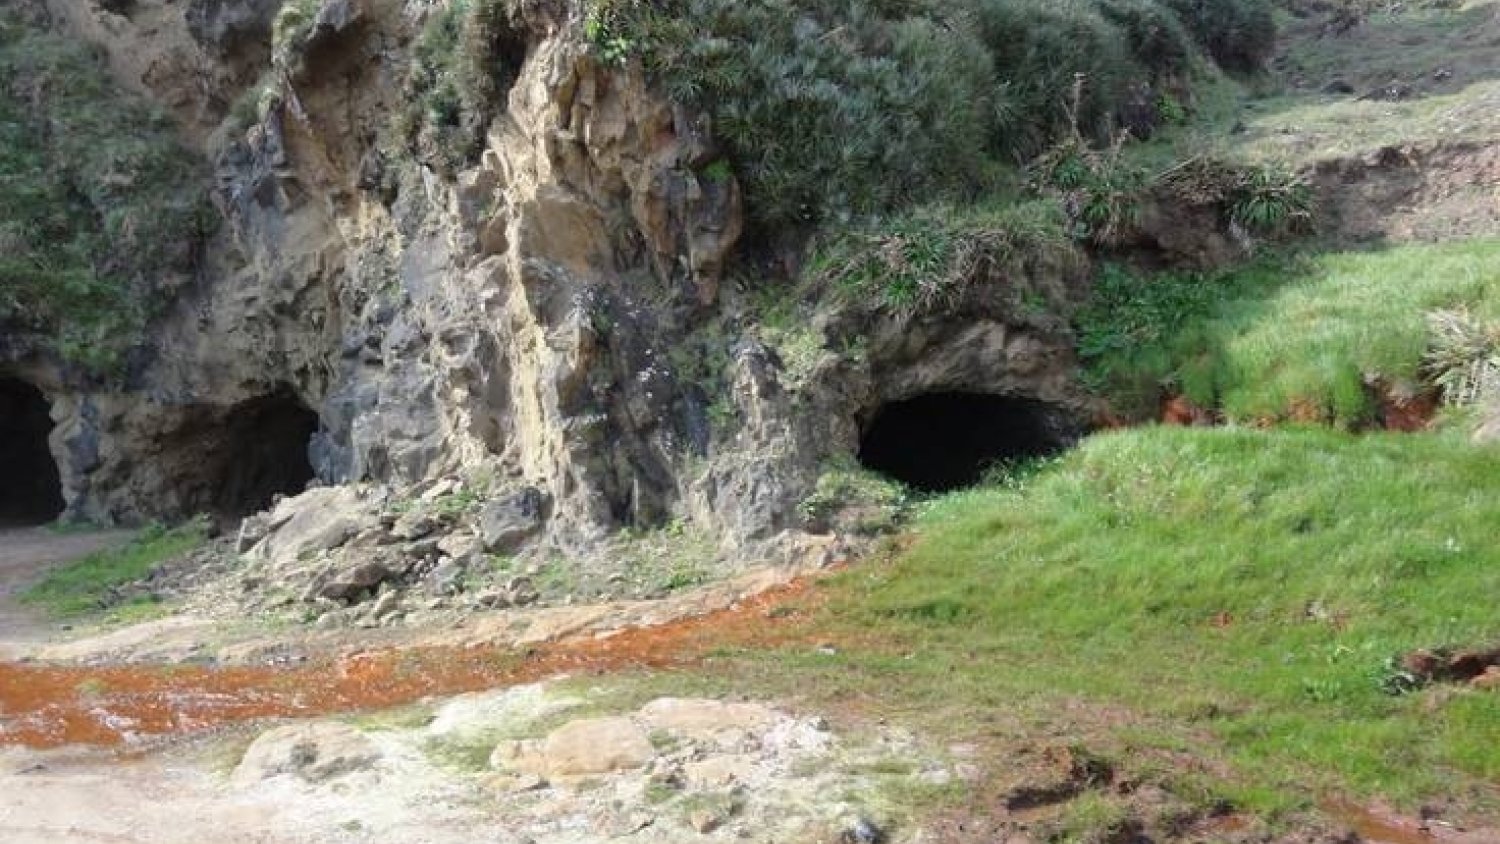 Cultura autoriza un proyecto investigador sobre el arte rupestre de la Cueva del Toro